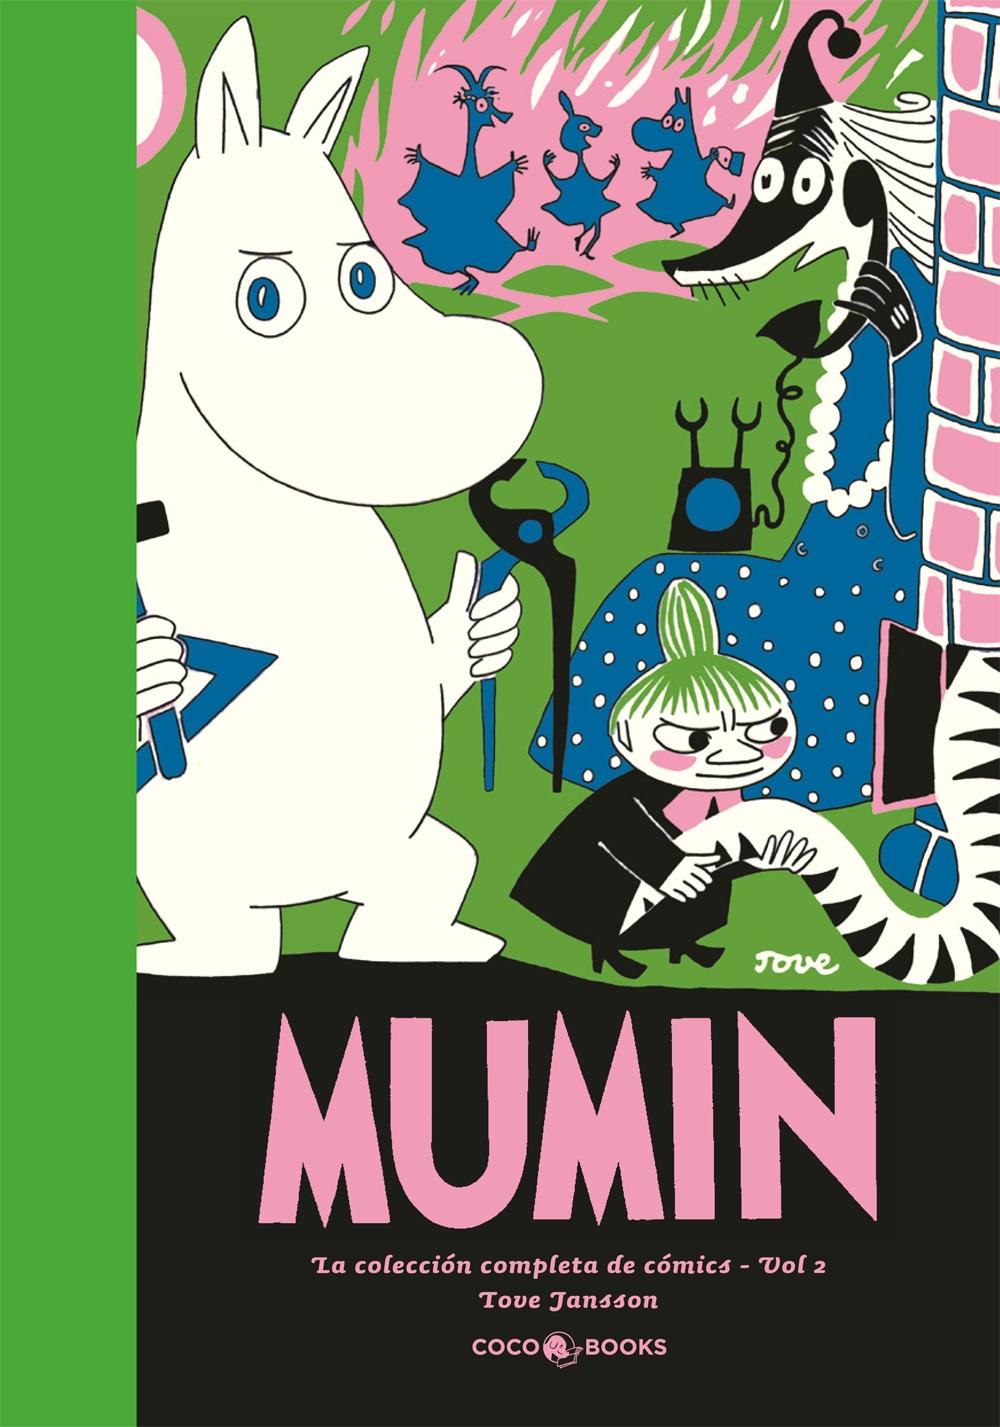 Mumin "La Colección Completa de Cómics - Vol. 2". 